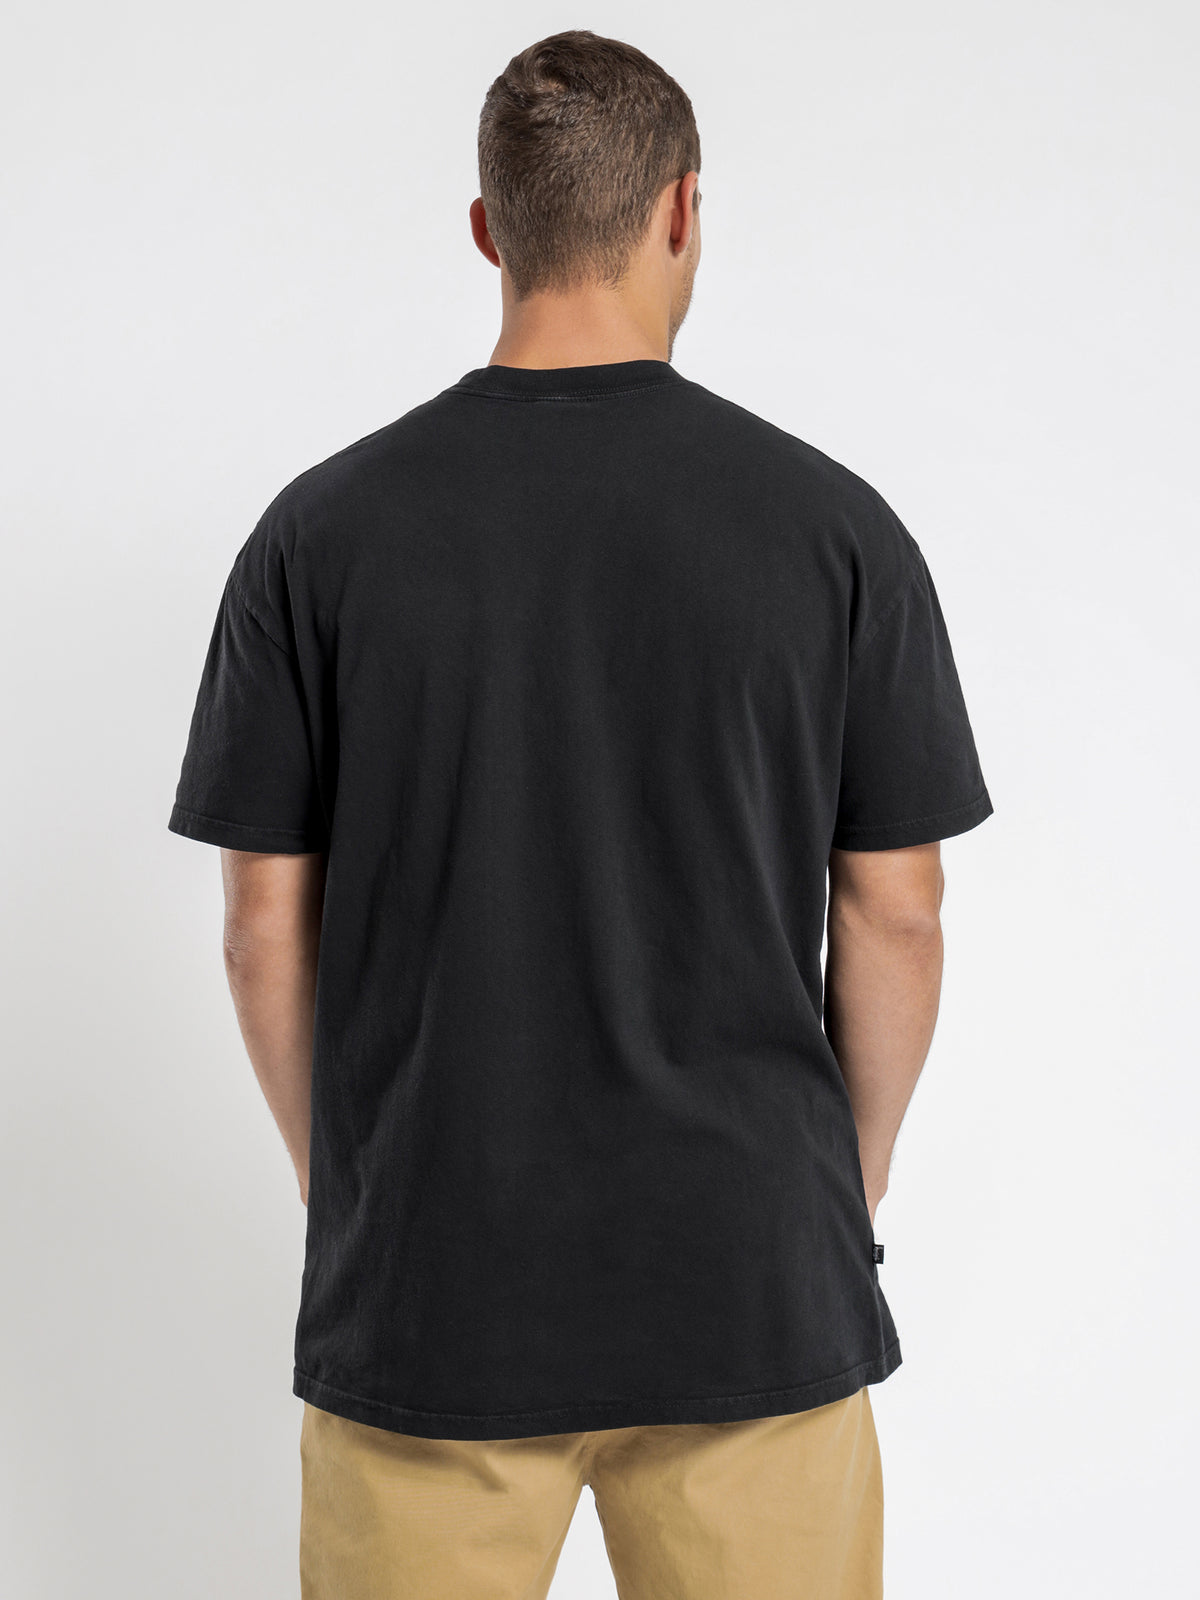 Classic Gear Pocket T-Shirt in Black